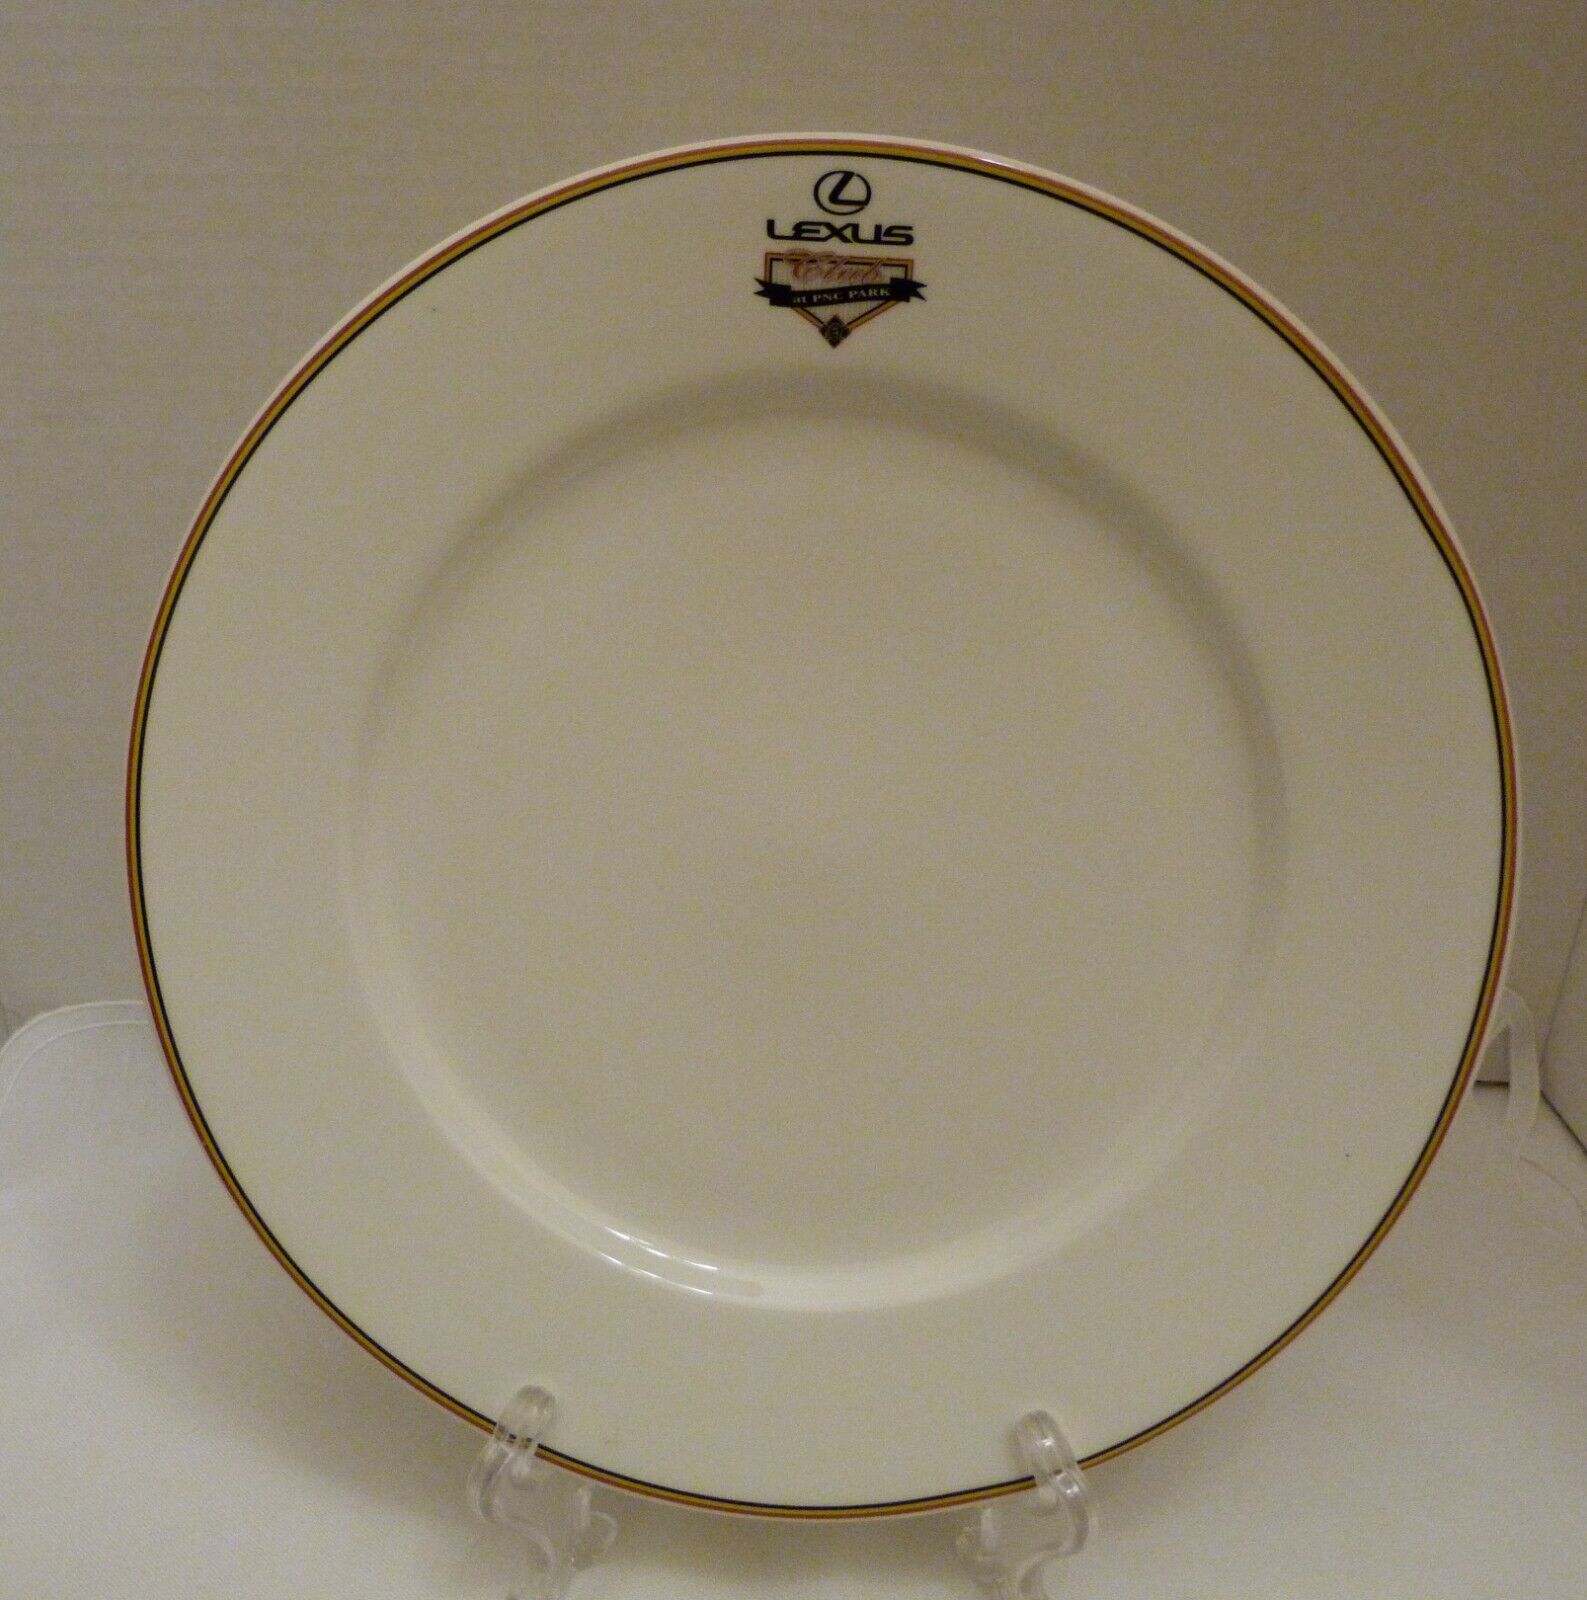 Lexus Club at PNC Park Rare Restaurantware Dinner Plate by Syracuse China USA